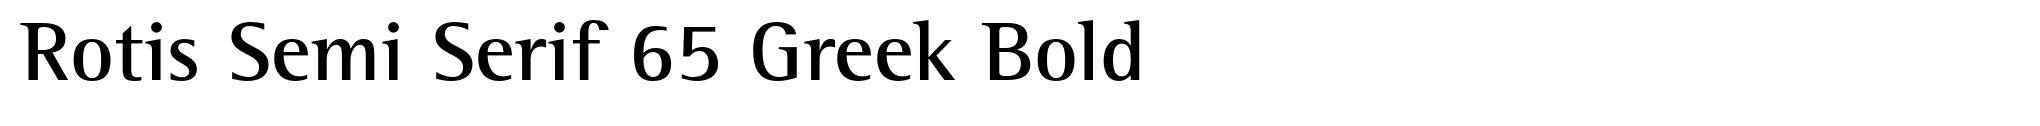 Rotis Semi Serif 65 Greek Bold image